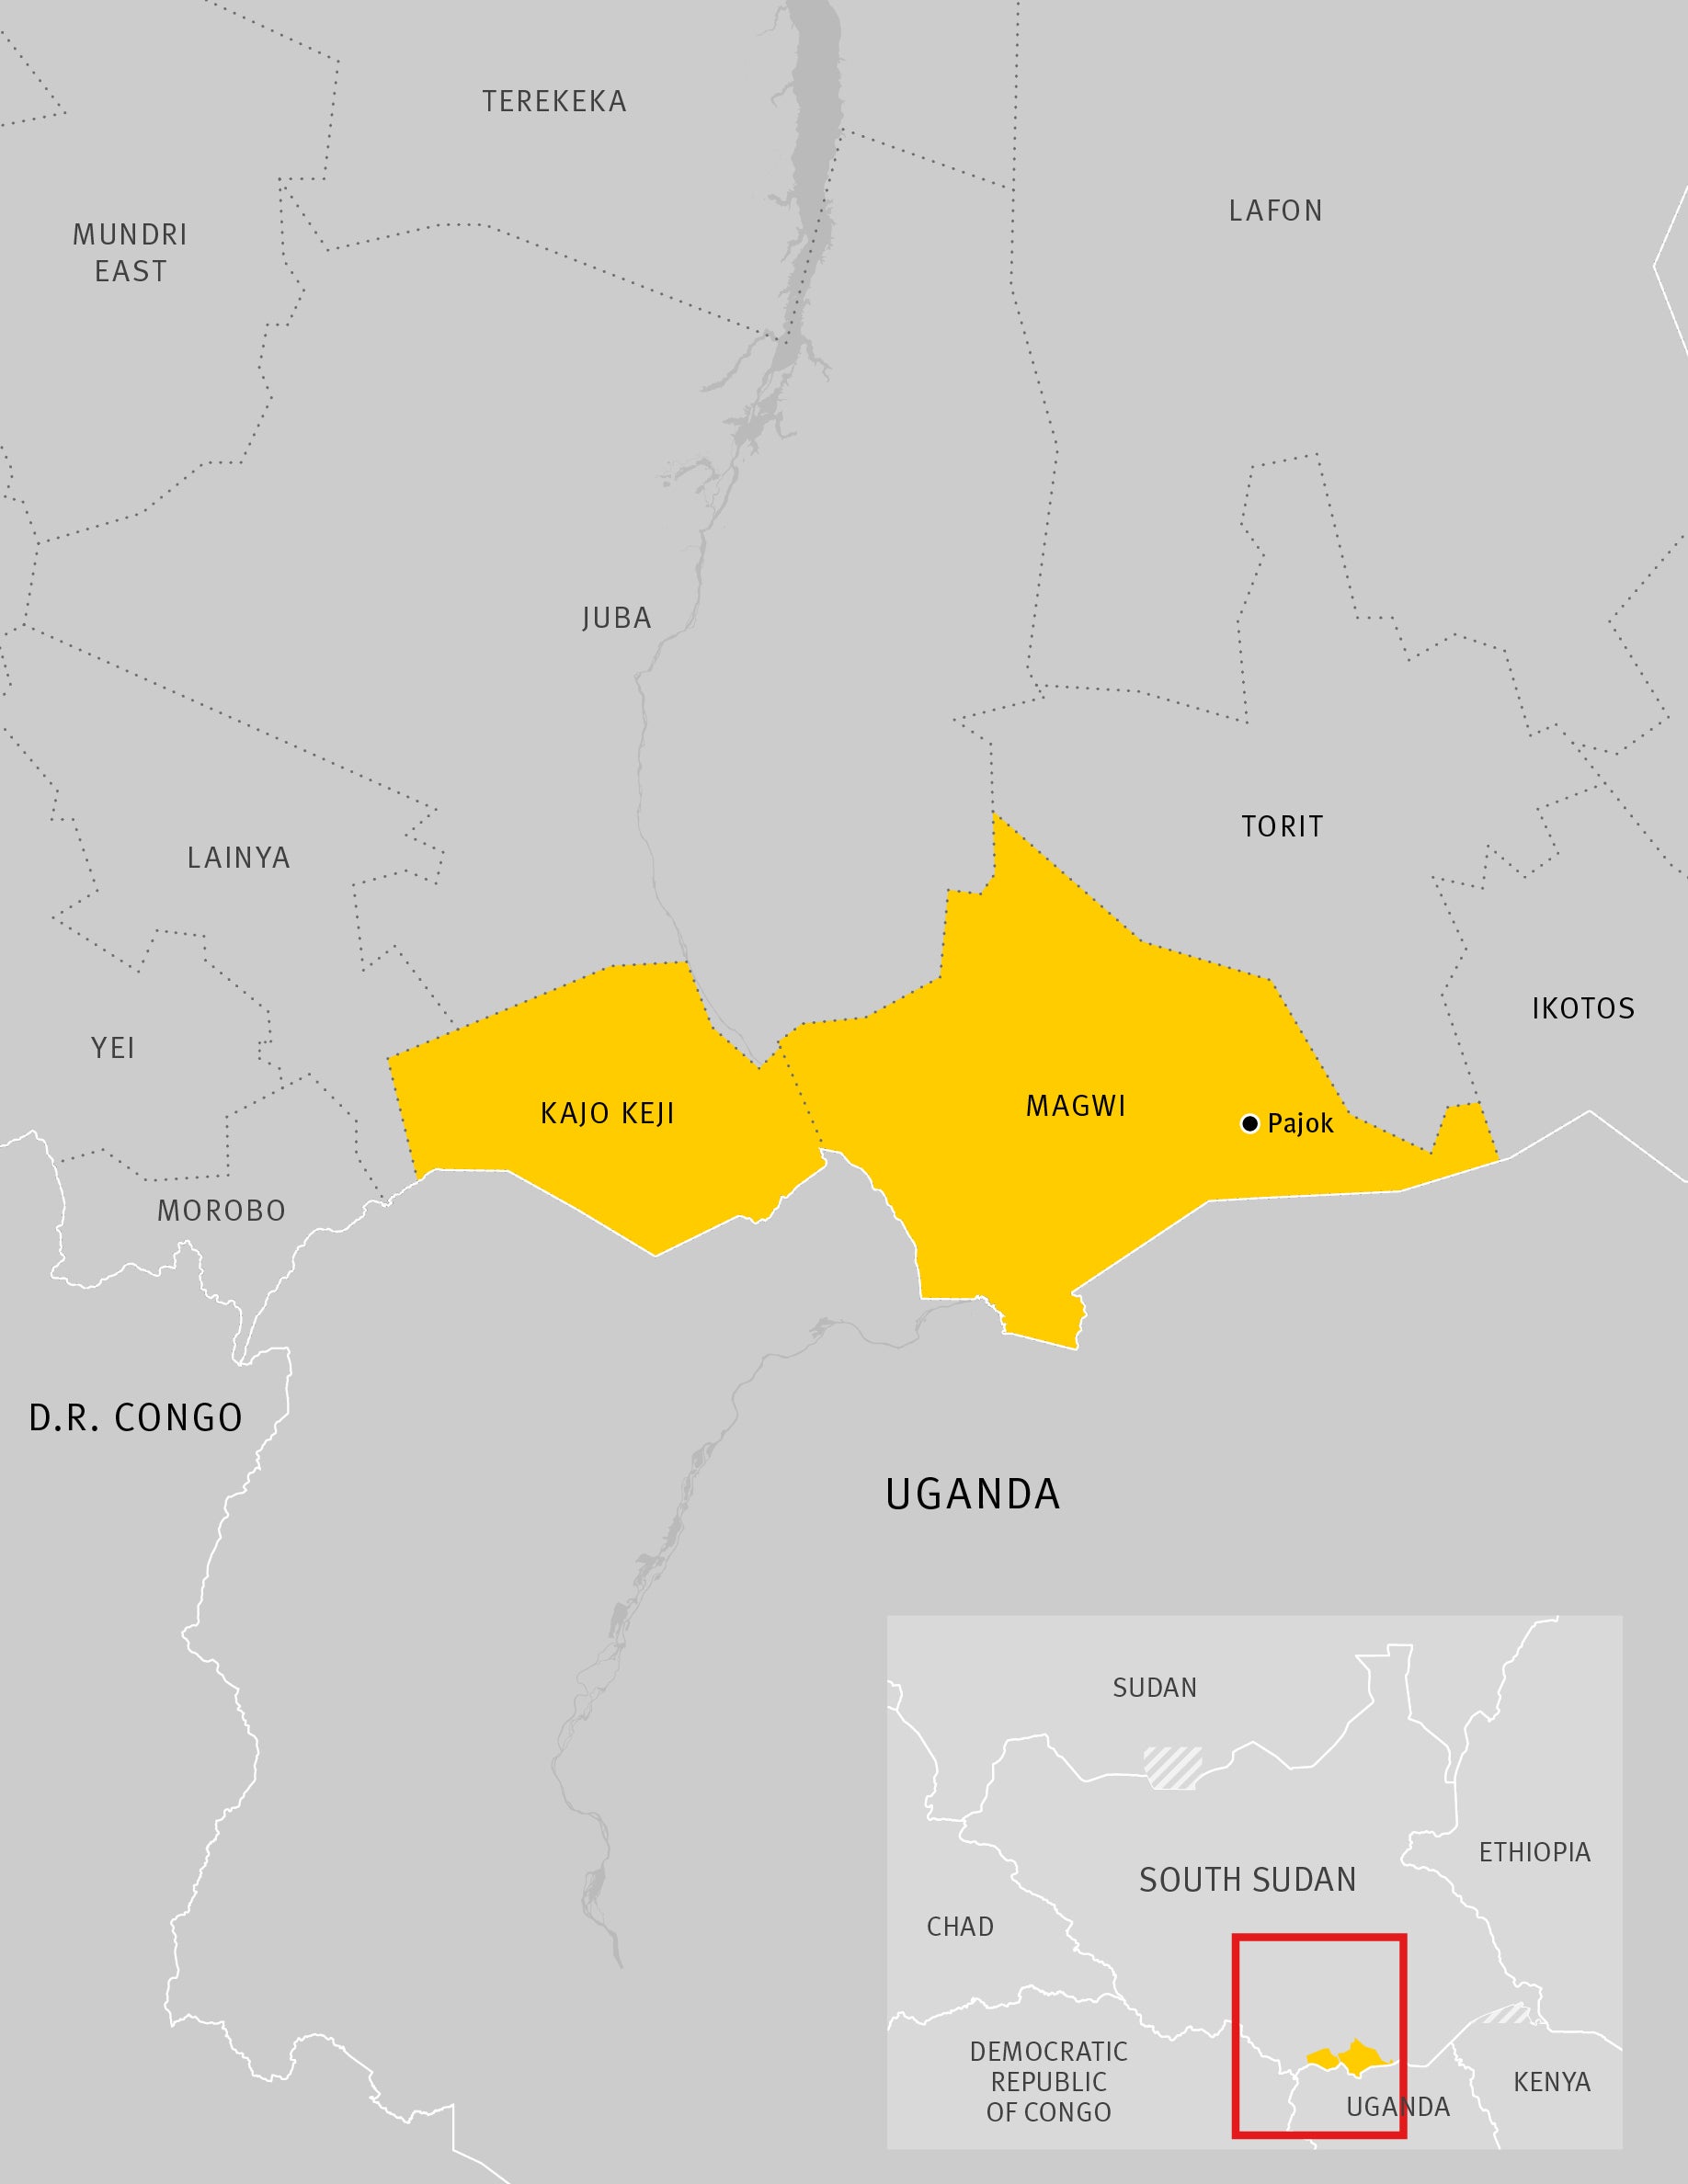 Map of Kajo Keji and Magwi Areas in South Sudan